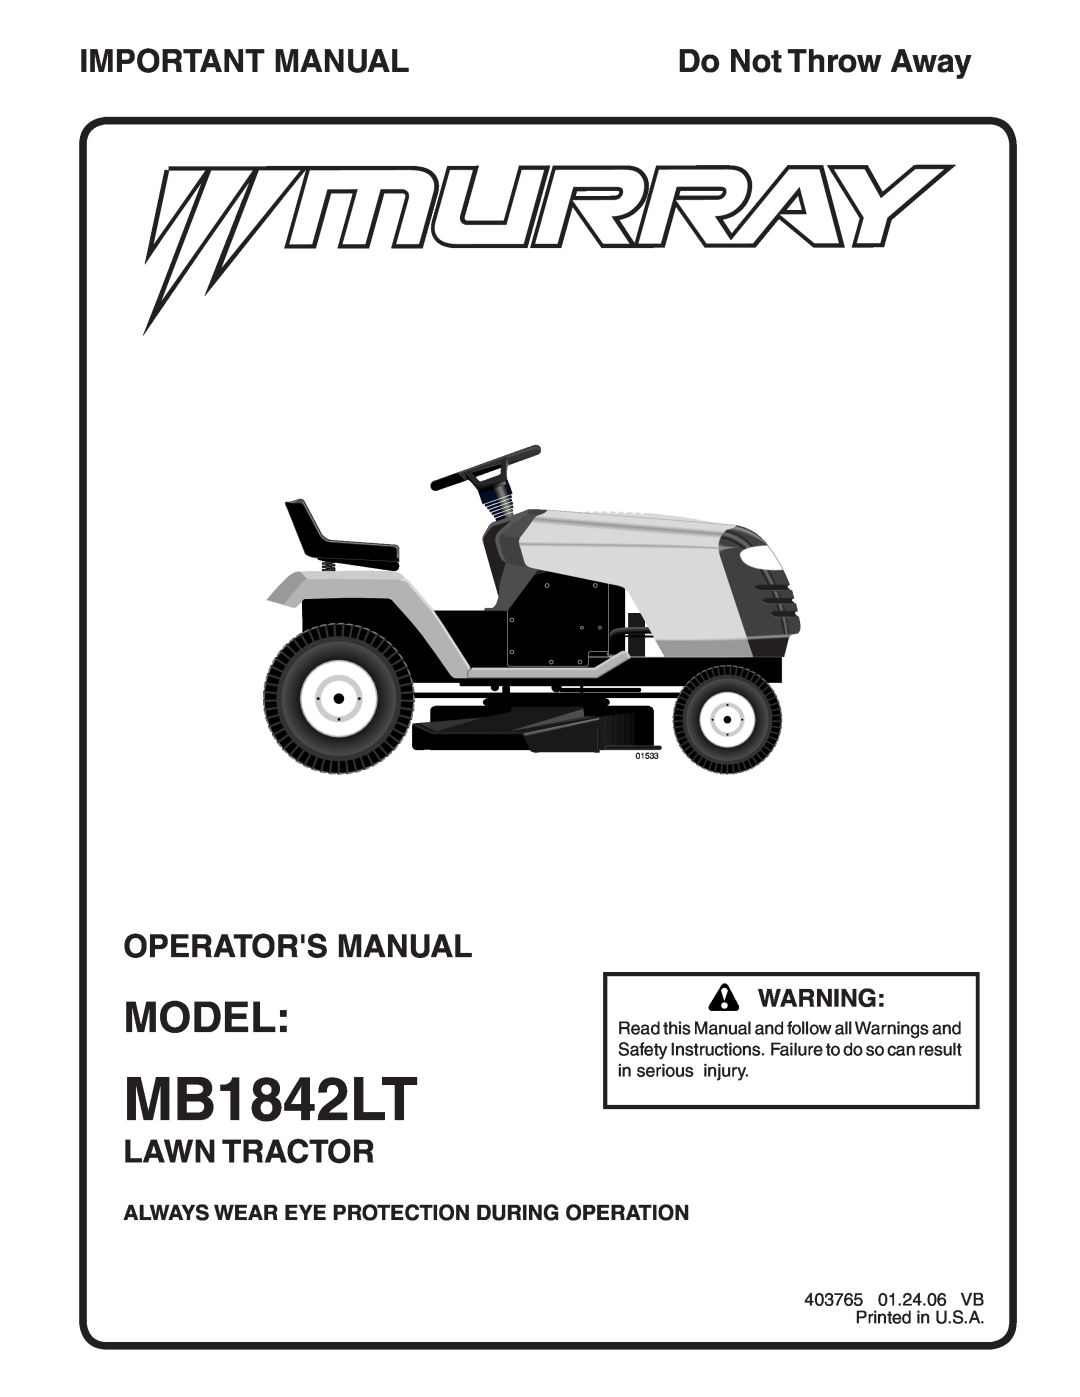 Murray MB1842LT manual Model, Important Manual, Operators Manual, Lawn Tractor, Do Not Throw Away, 01533 